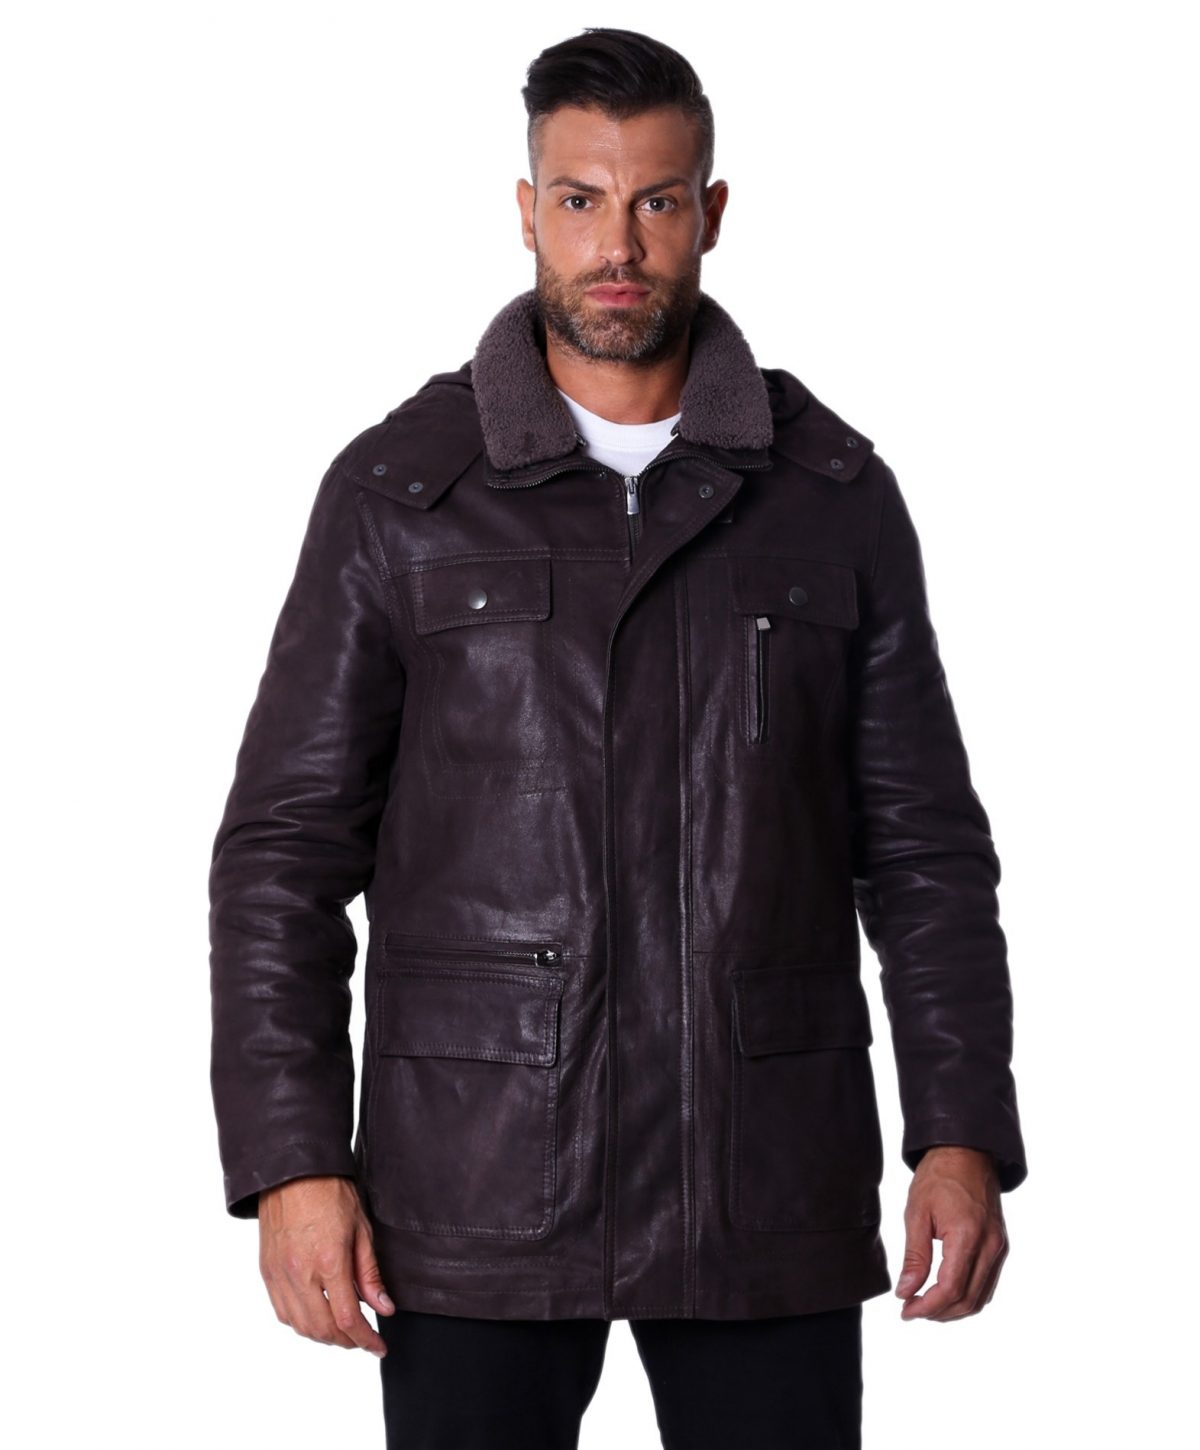 men-s-long-leather-coat-genuine-soft-leather-five-pockets-detachable-hood-dark-brown-color-vittorio